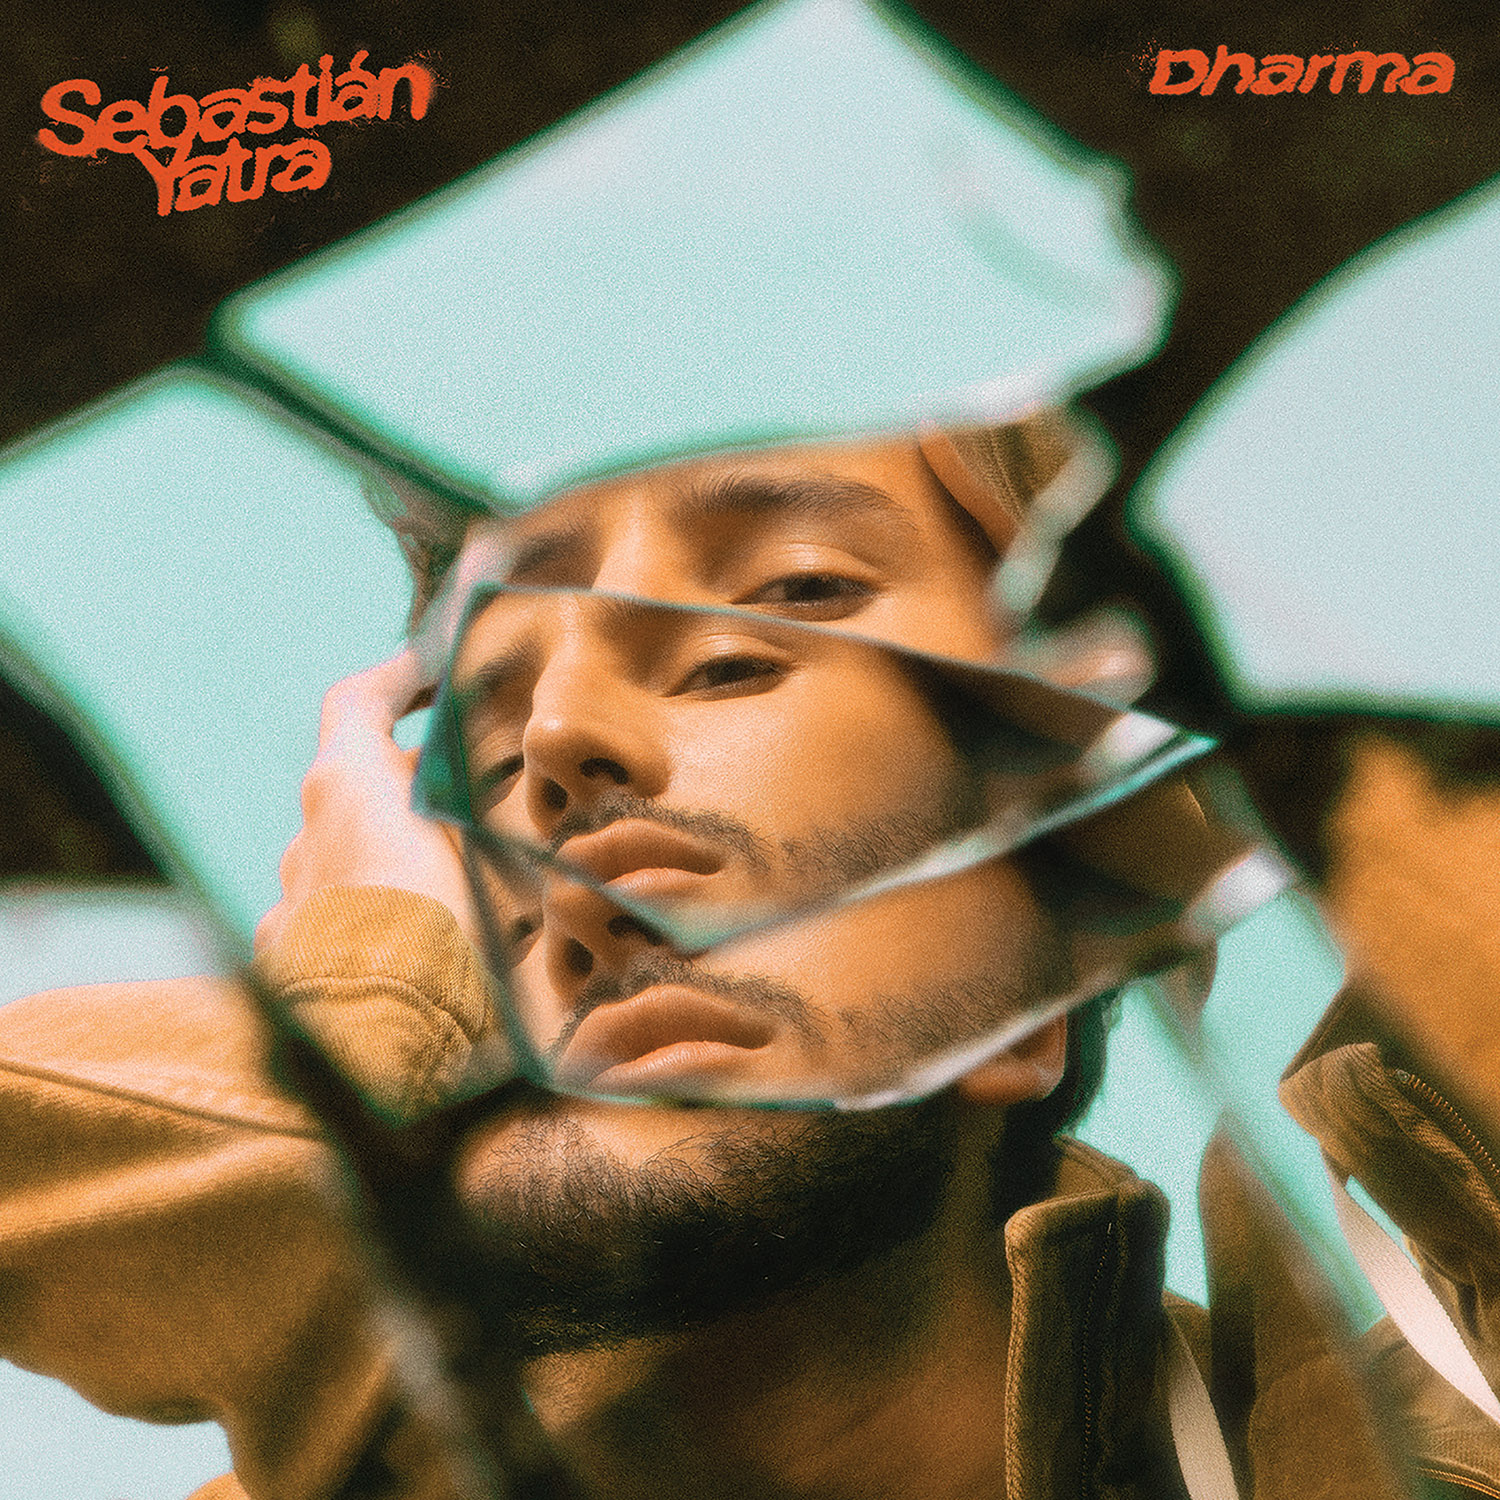 Sebastían Yatra lanza su tercer álbum “Dharma”